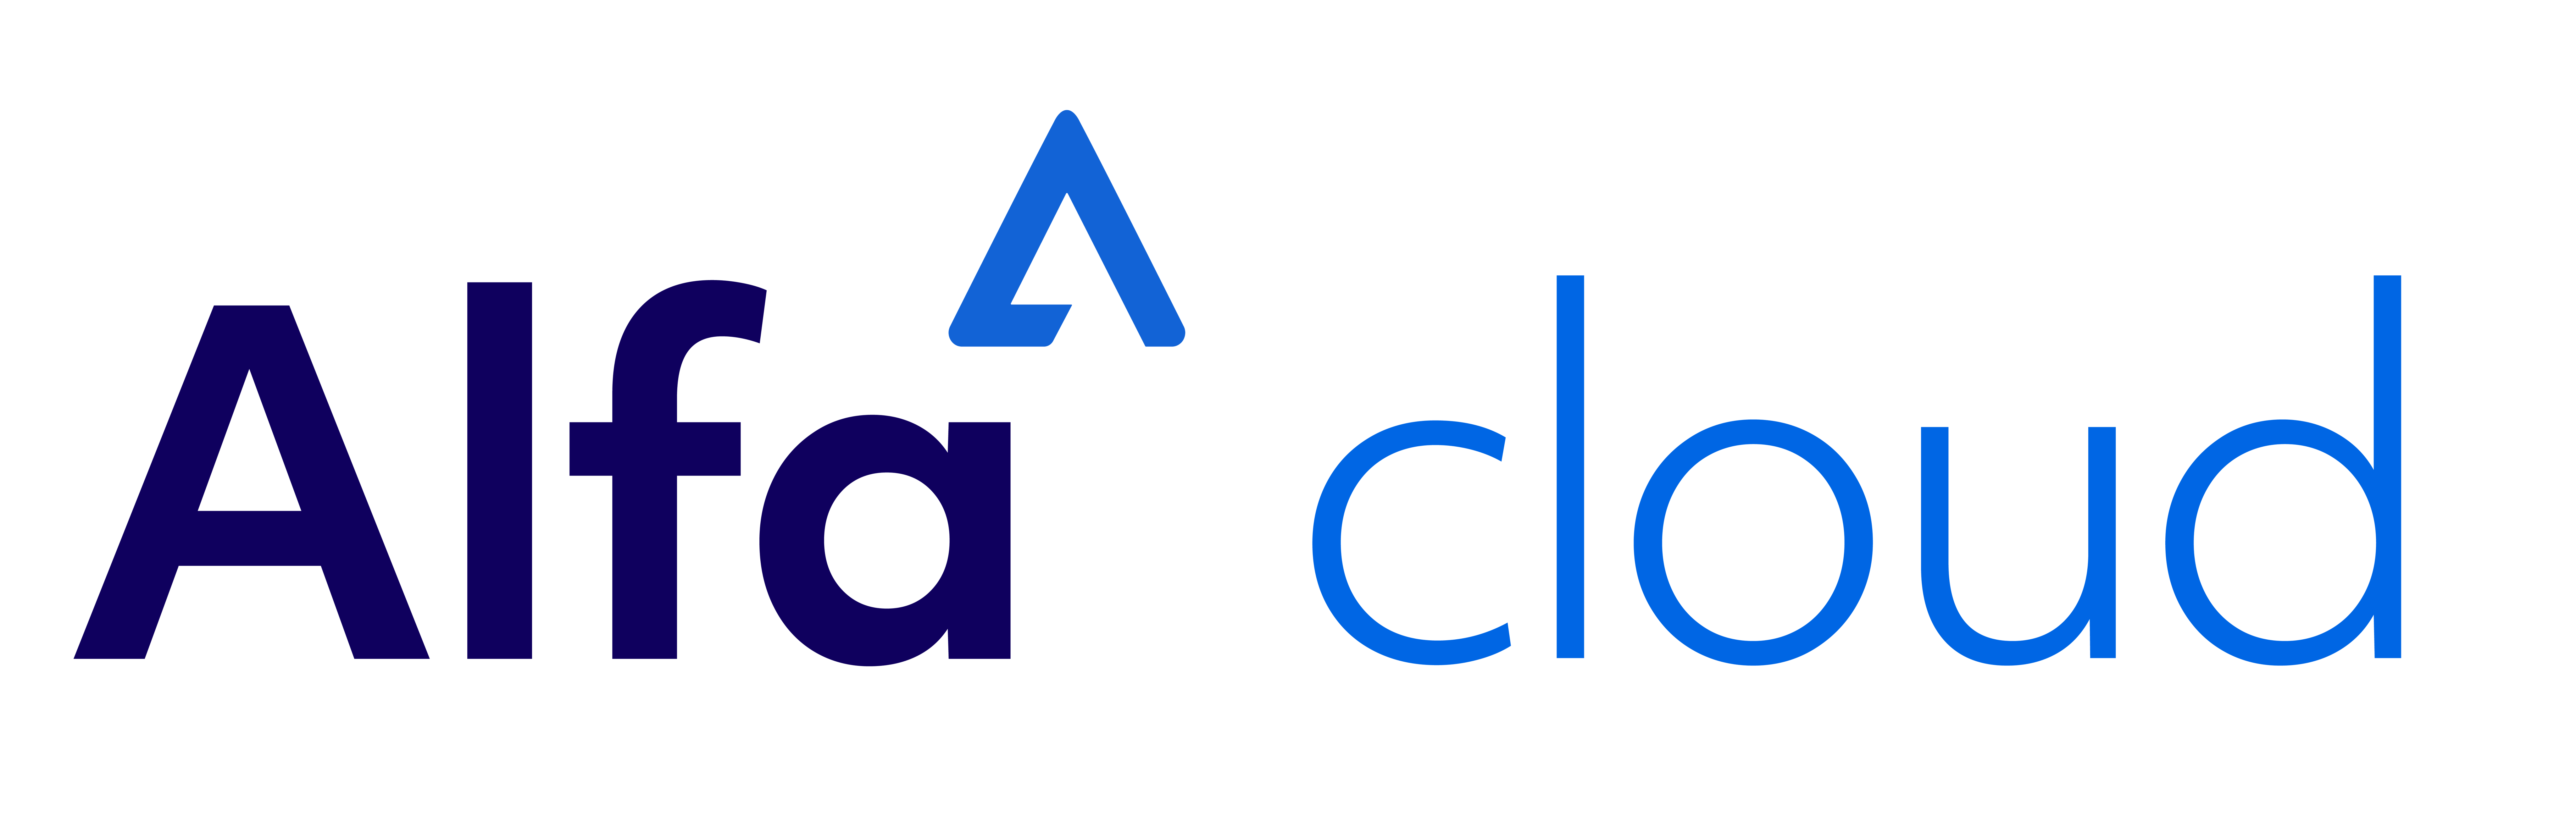 Alfa cloud logo